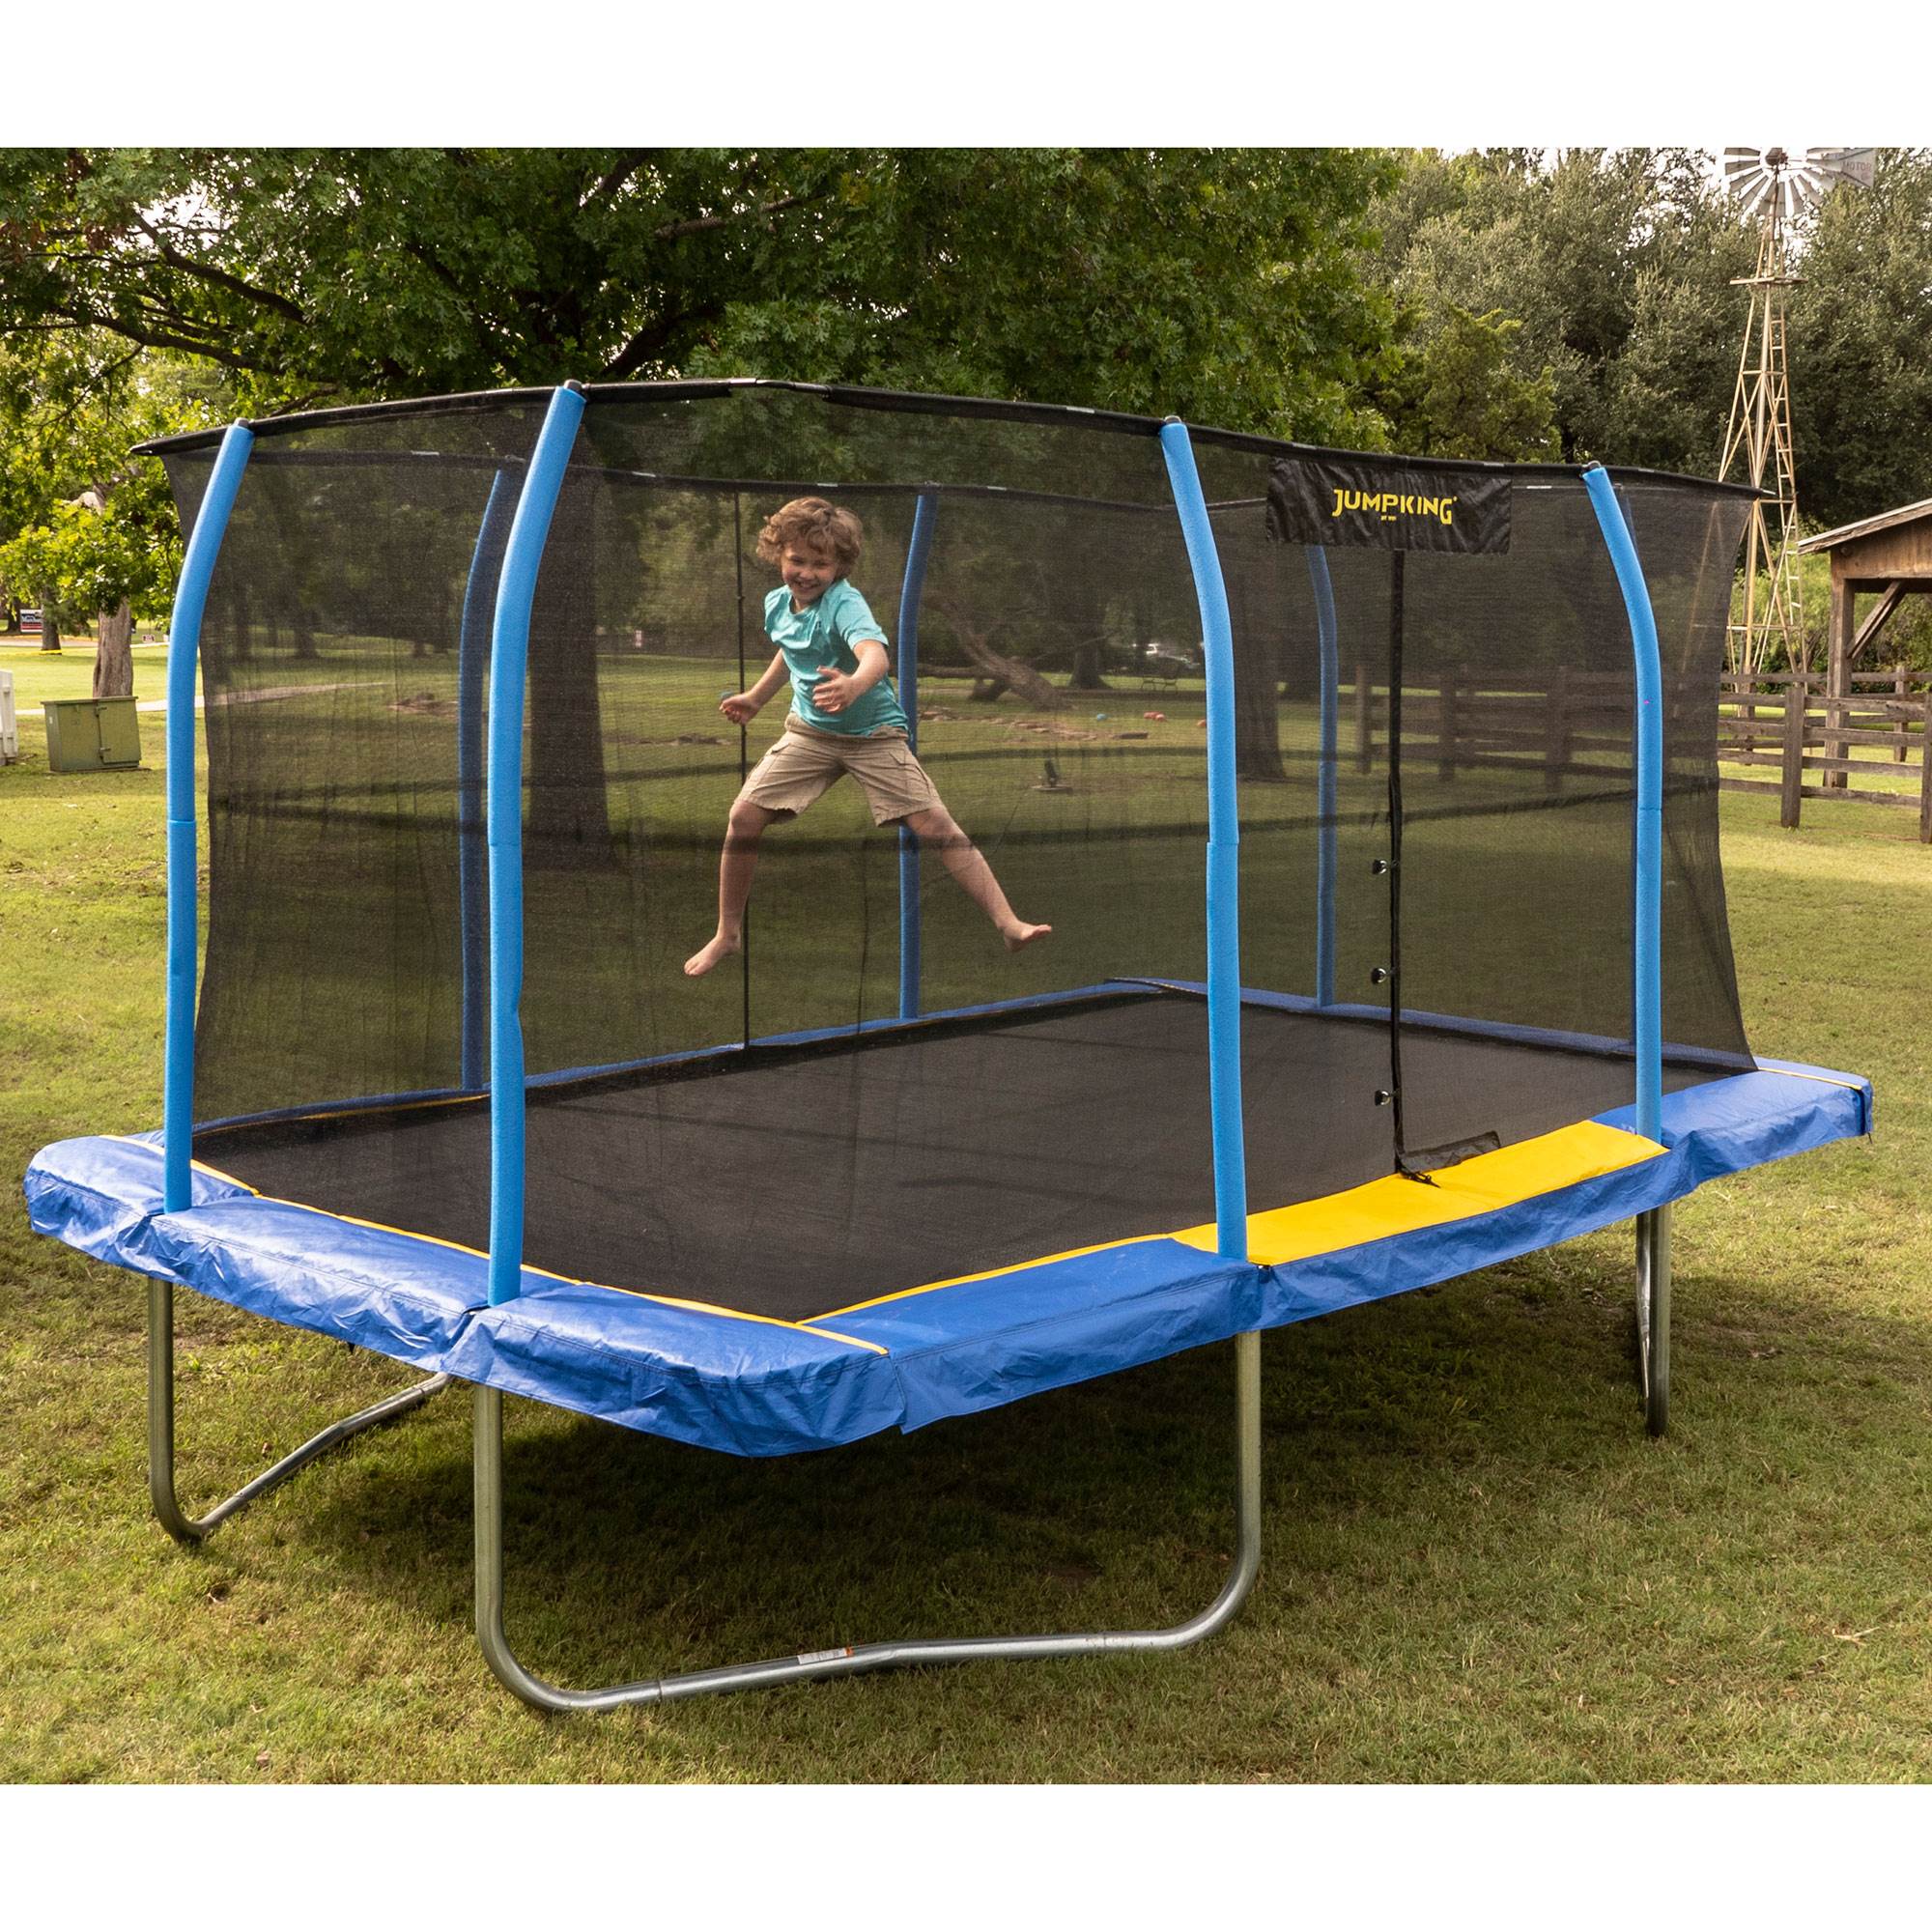 square or rectangle trampoline